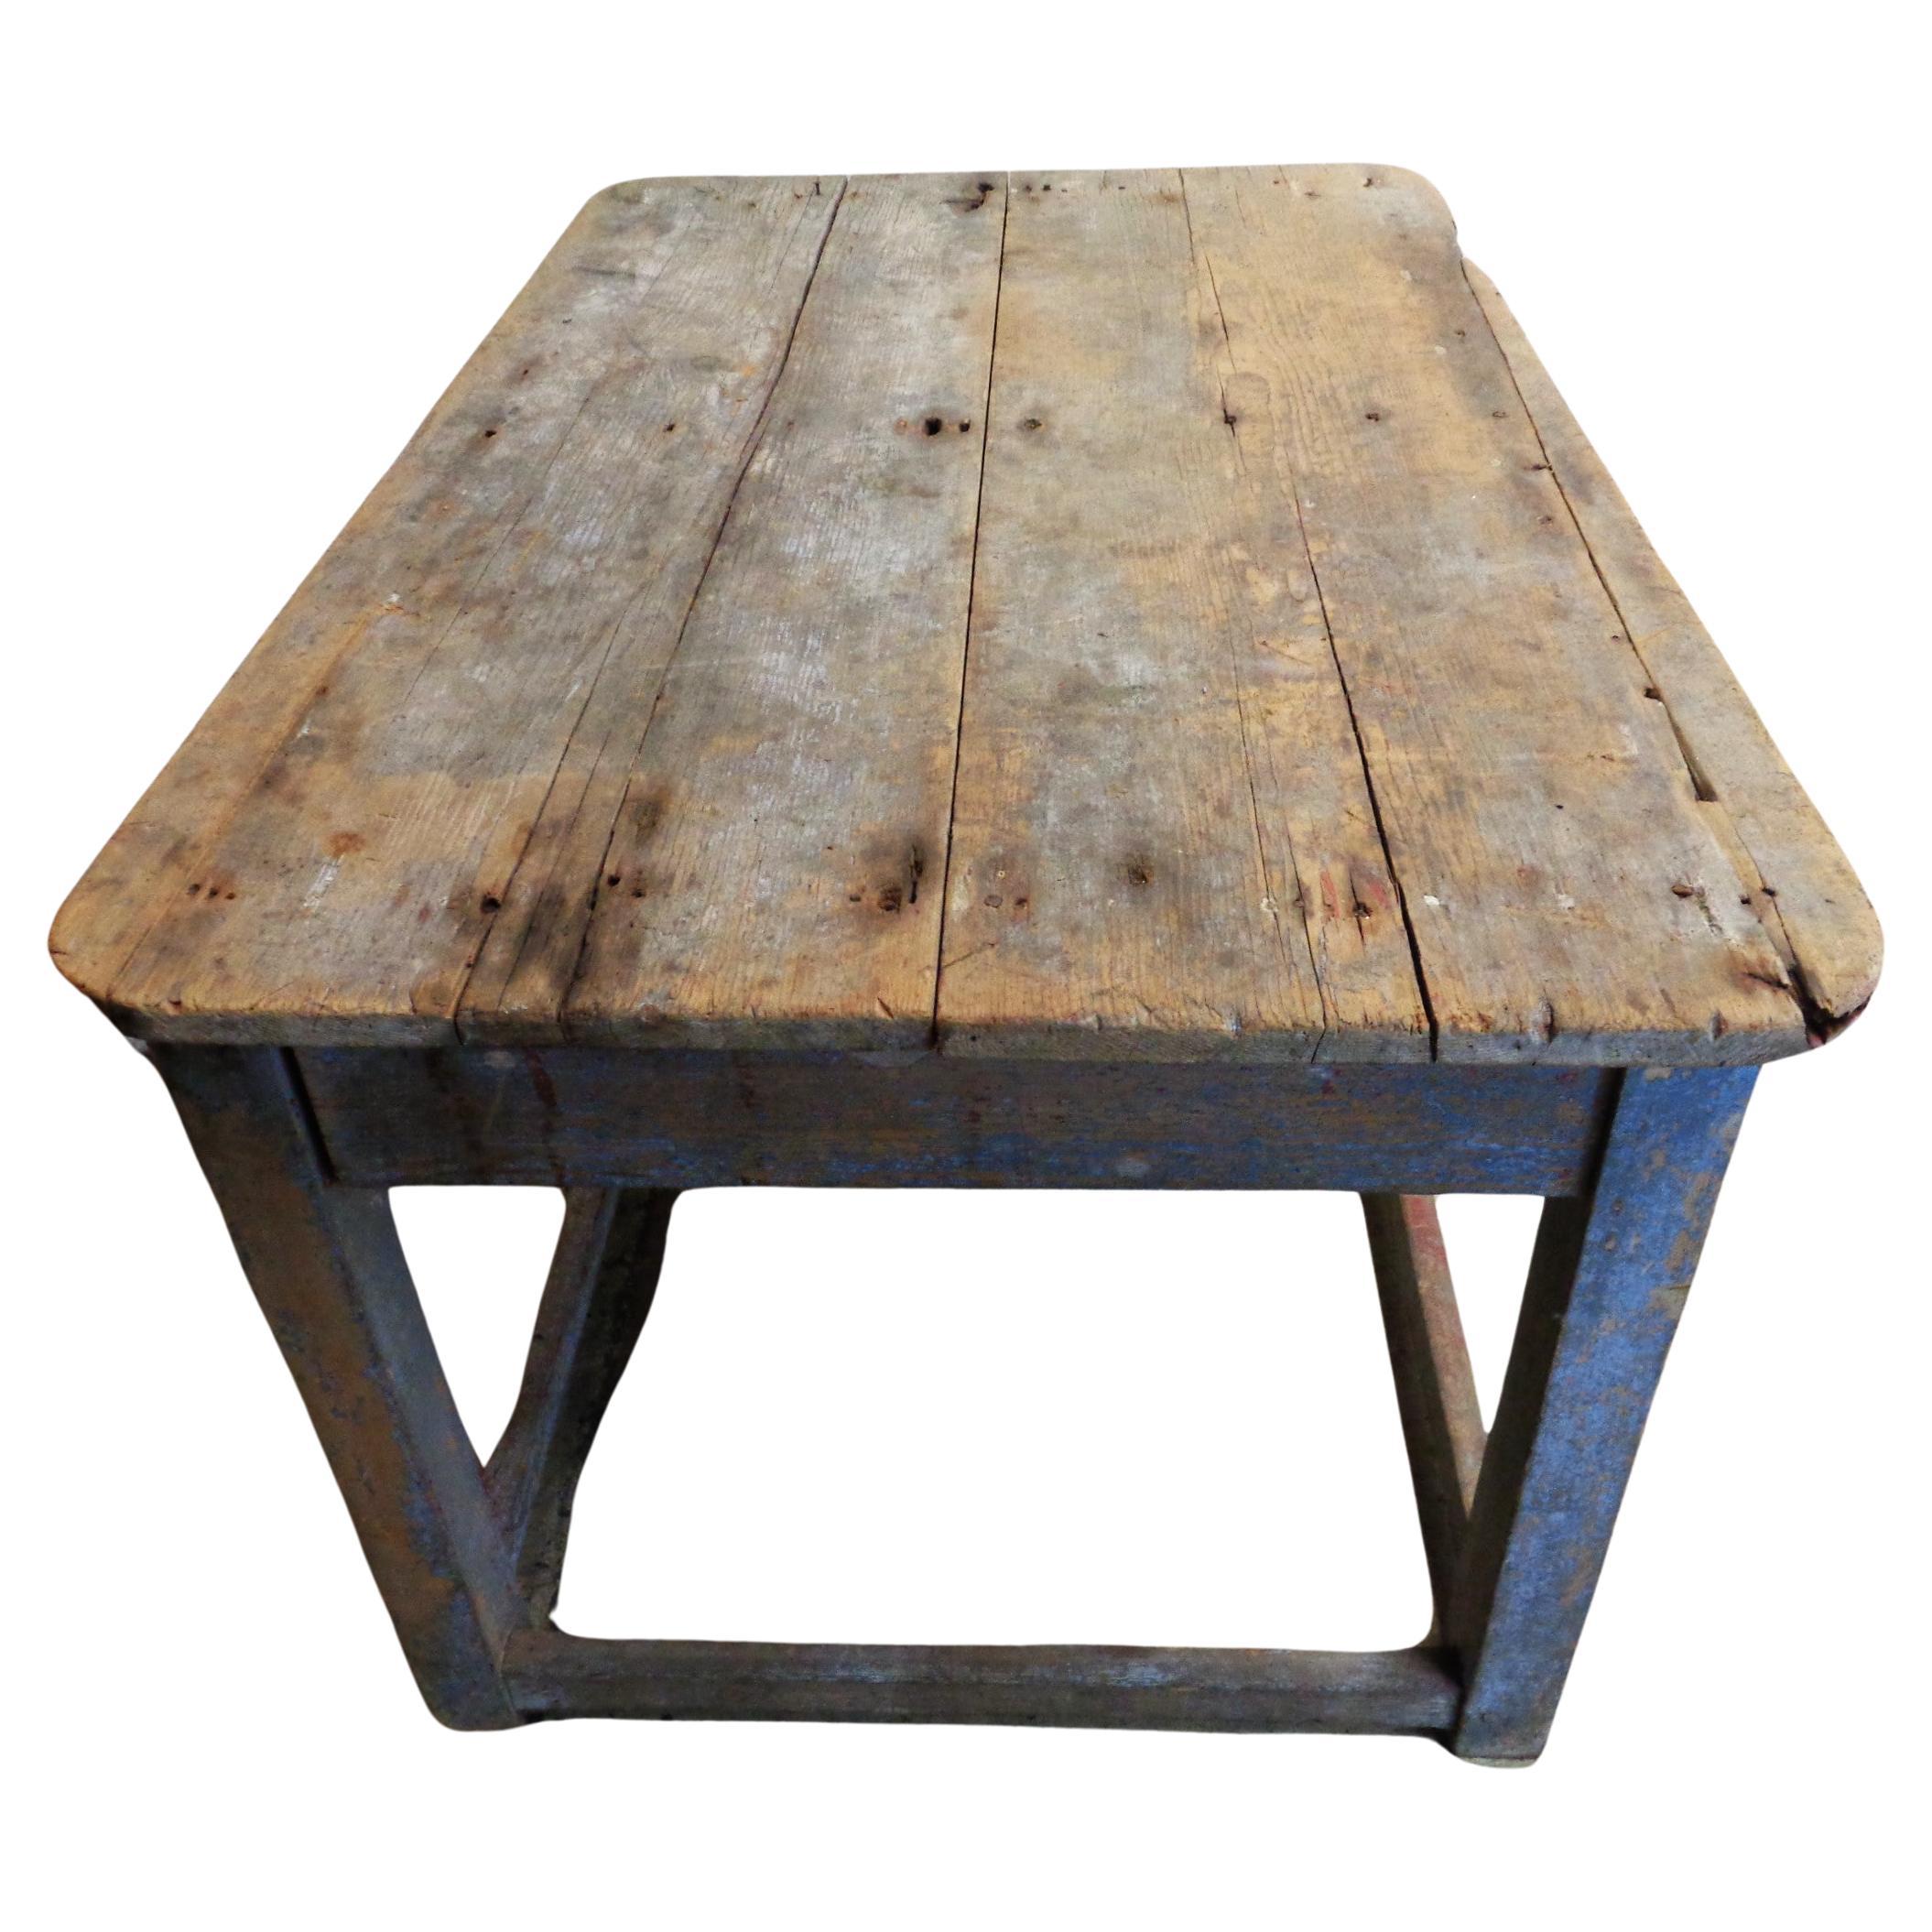  Early 19th Century Original Blue Painted Rustic Work Table  (Handgefertigt) im Angebot